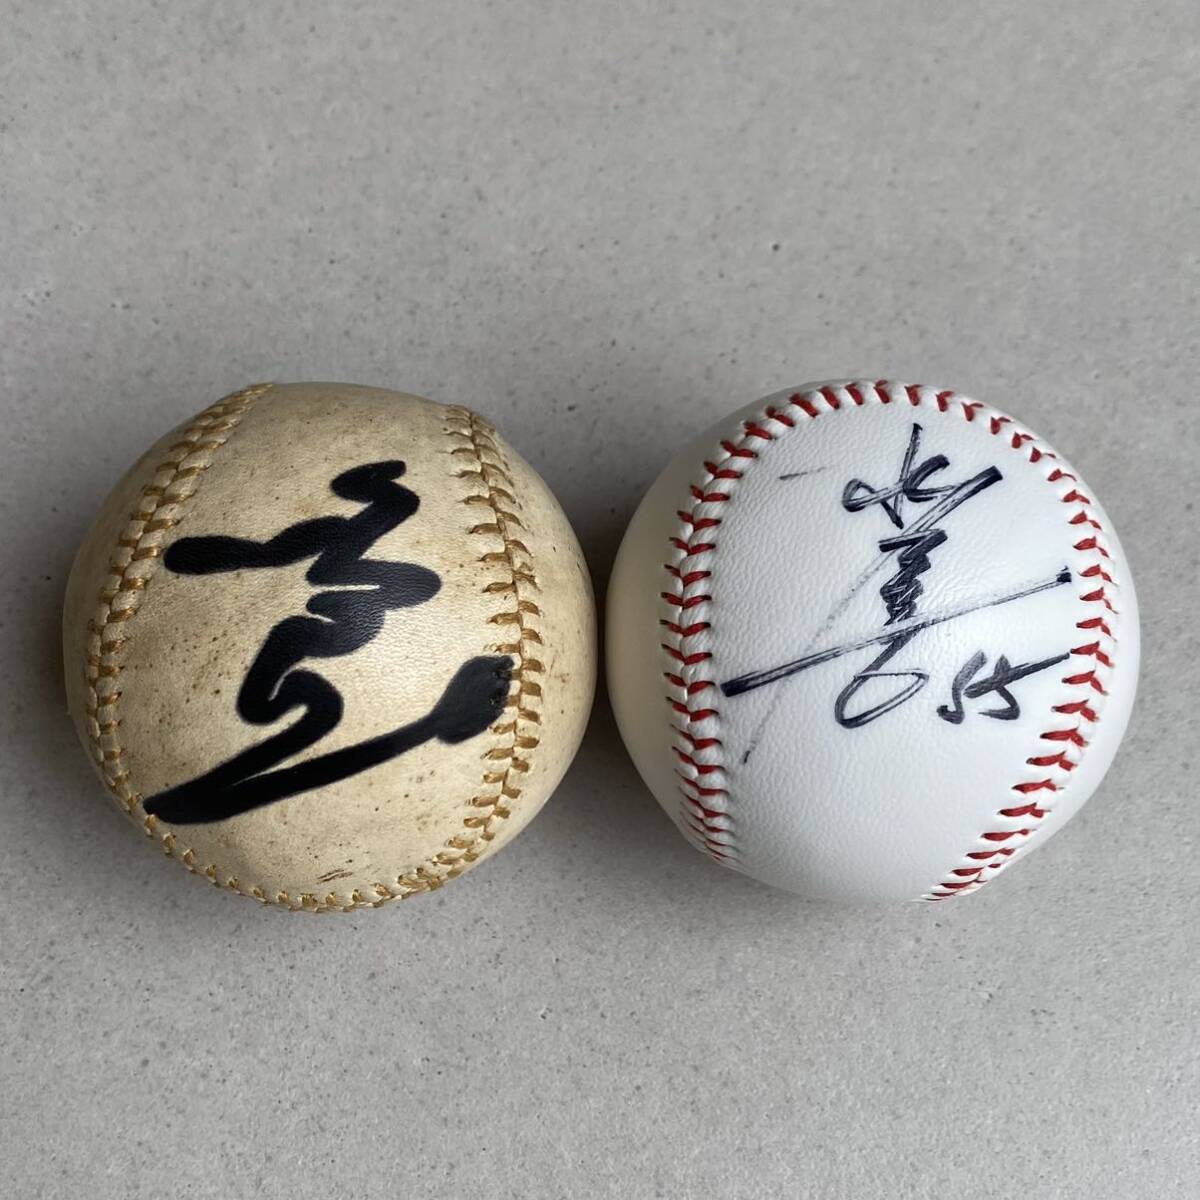  gold rice field regular one pine . preeminence . autograph ball autograph Yomiuri Giants . person Professional Baseball player baseball 